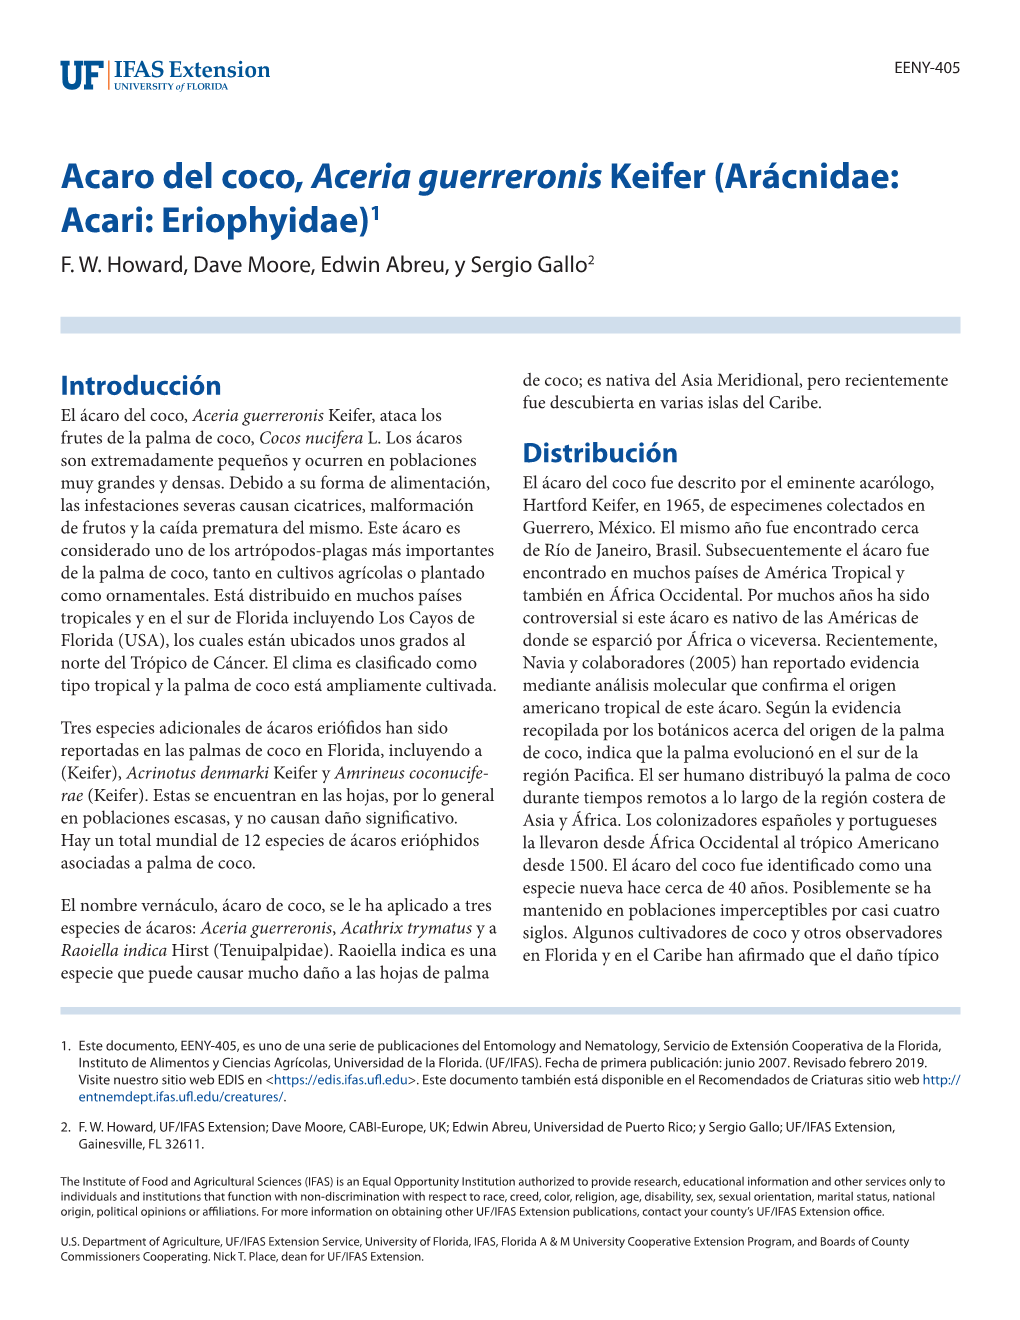 Acaro Del Coco, Aceria Guerreronis Keifer (Arácnidae: Acari: Eriophyidae)1 F